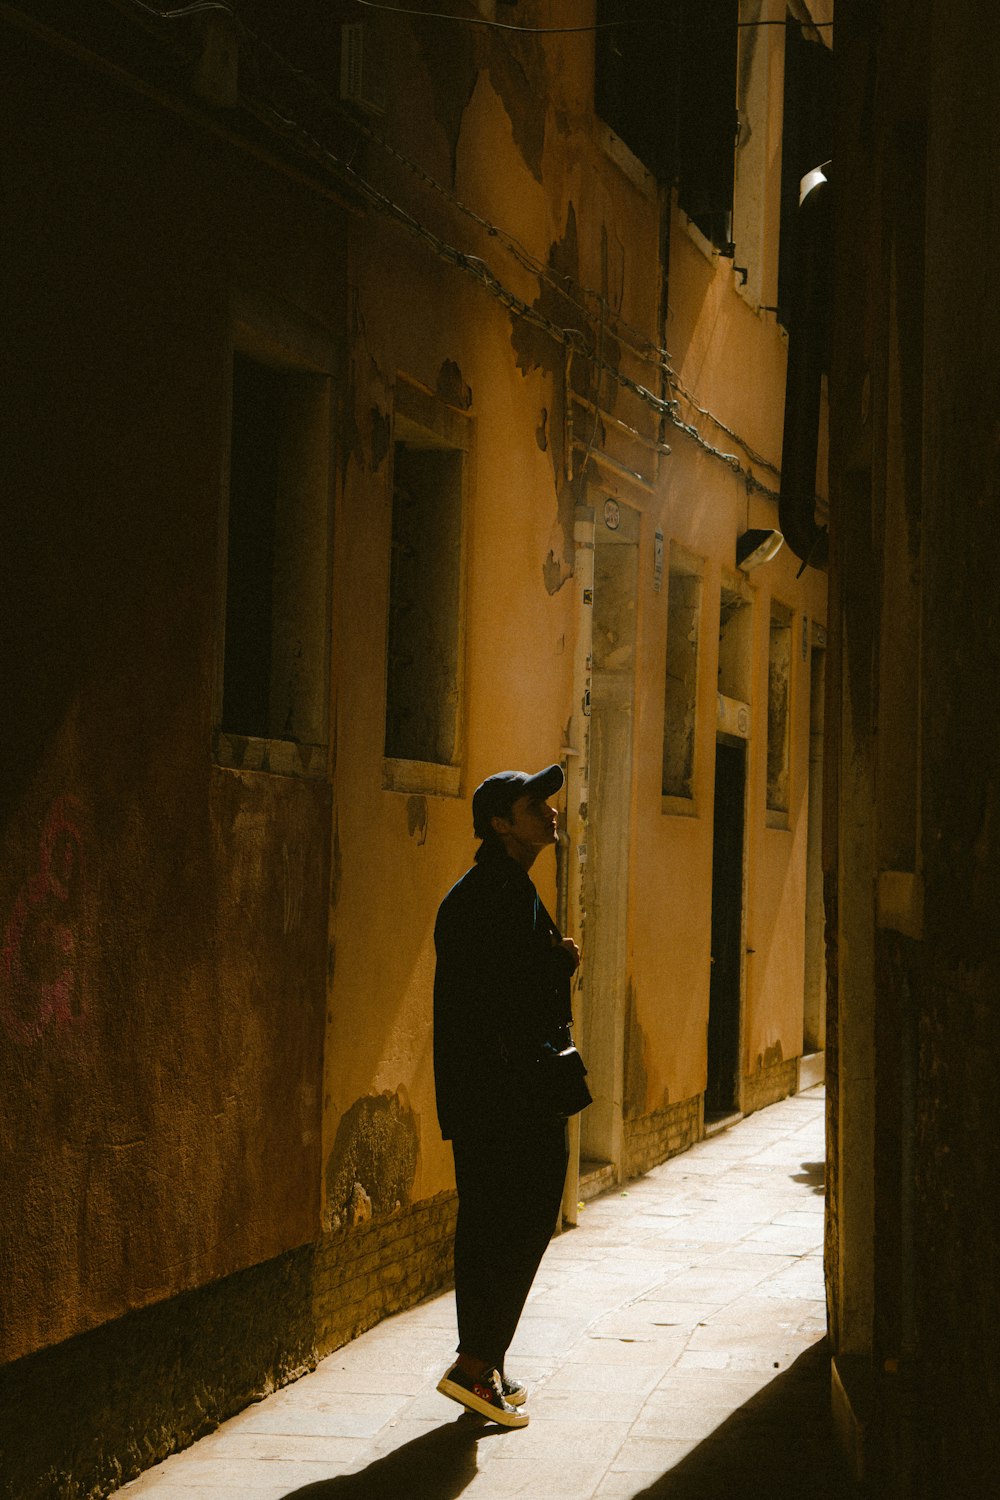 a man in a uniform standing in an alleyway